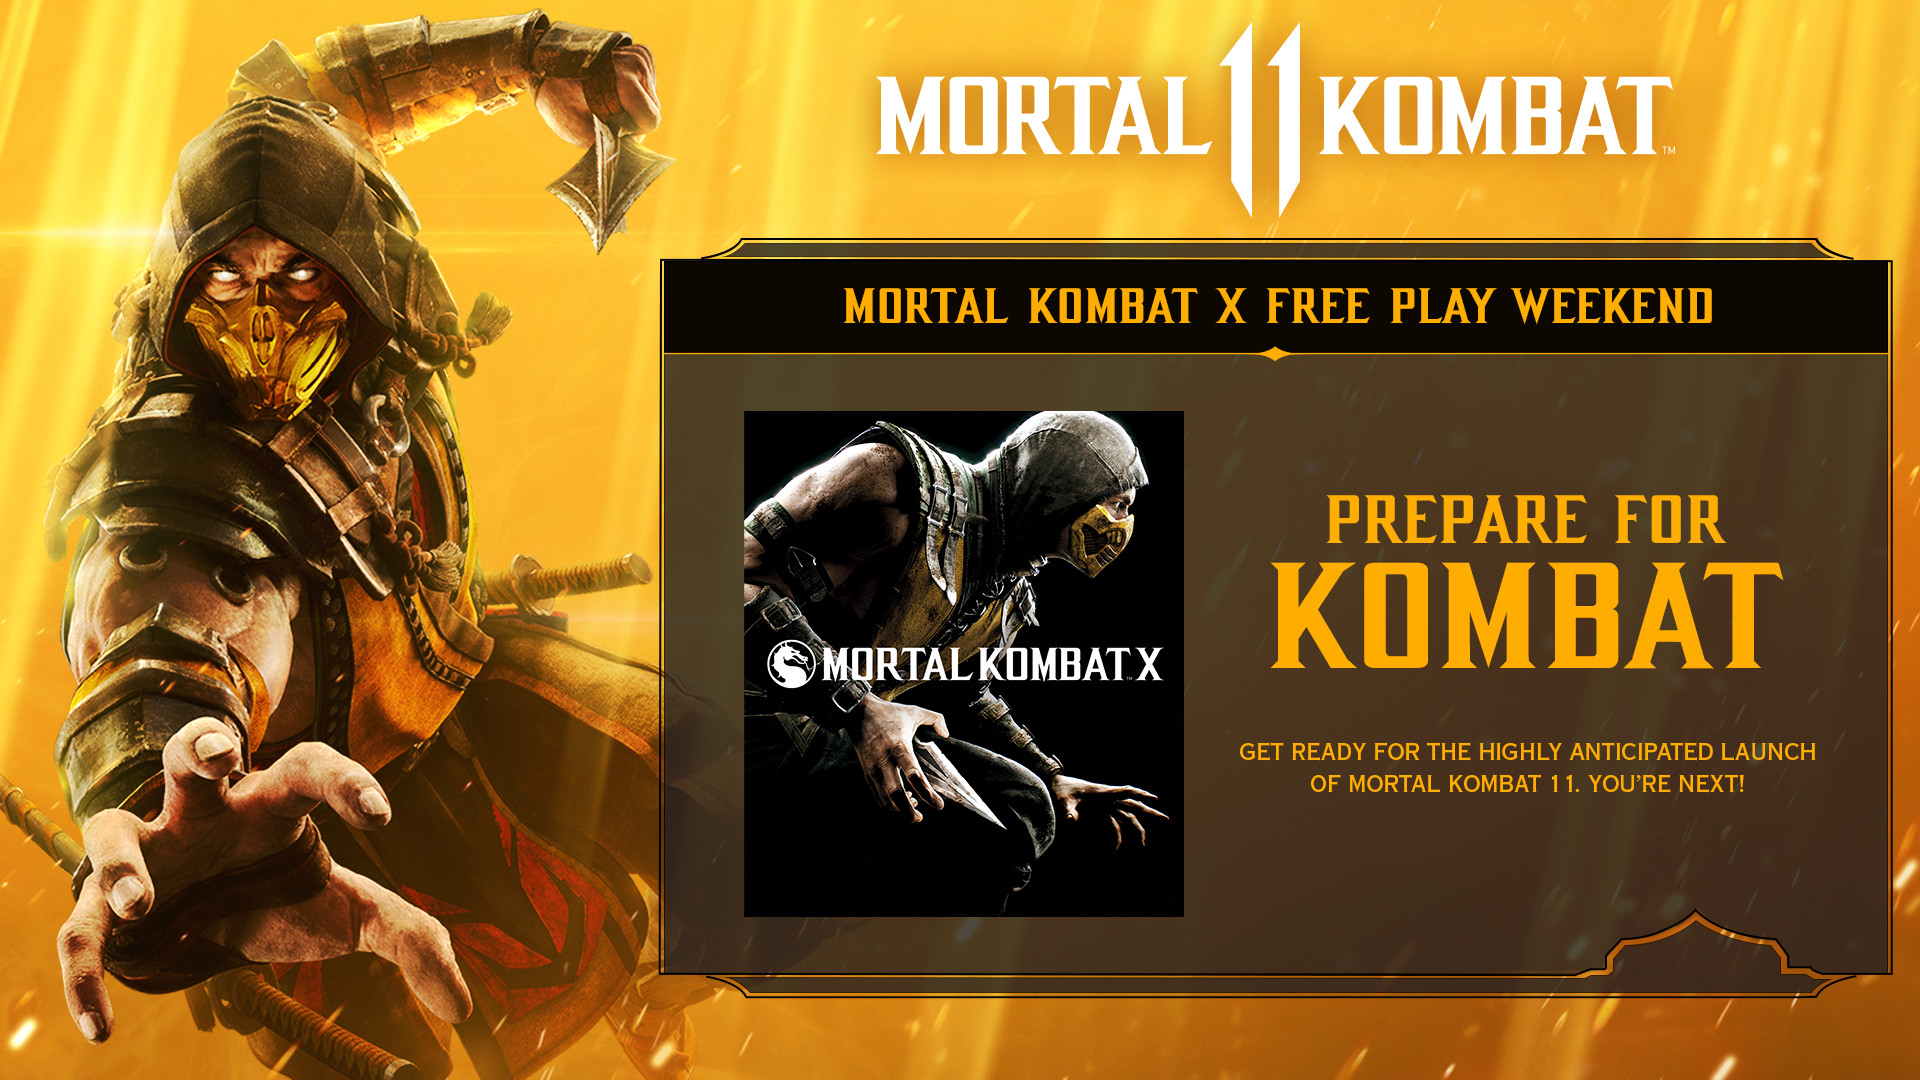 Mortal Kombat X System Requirements